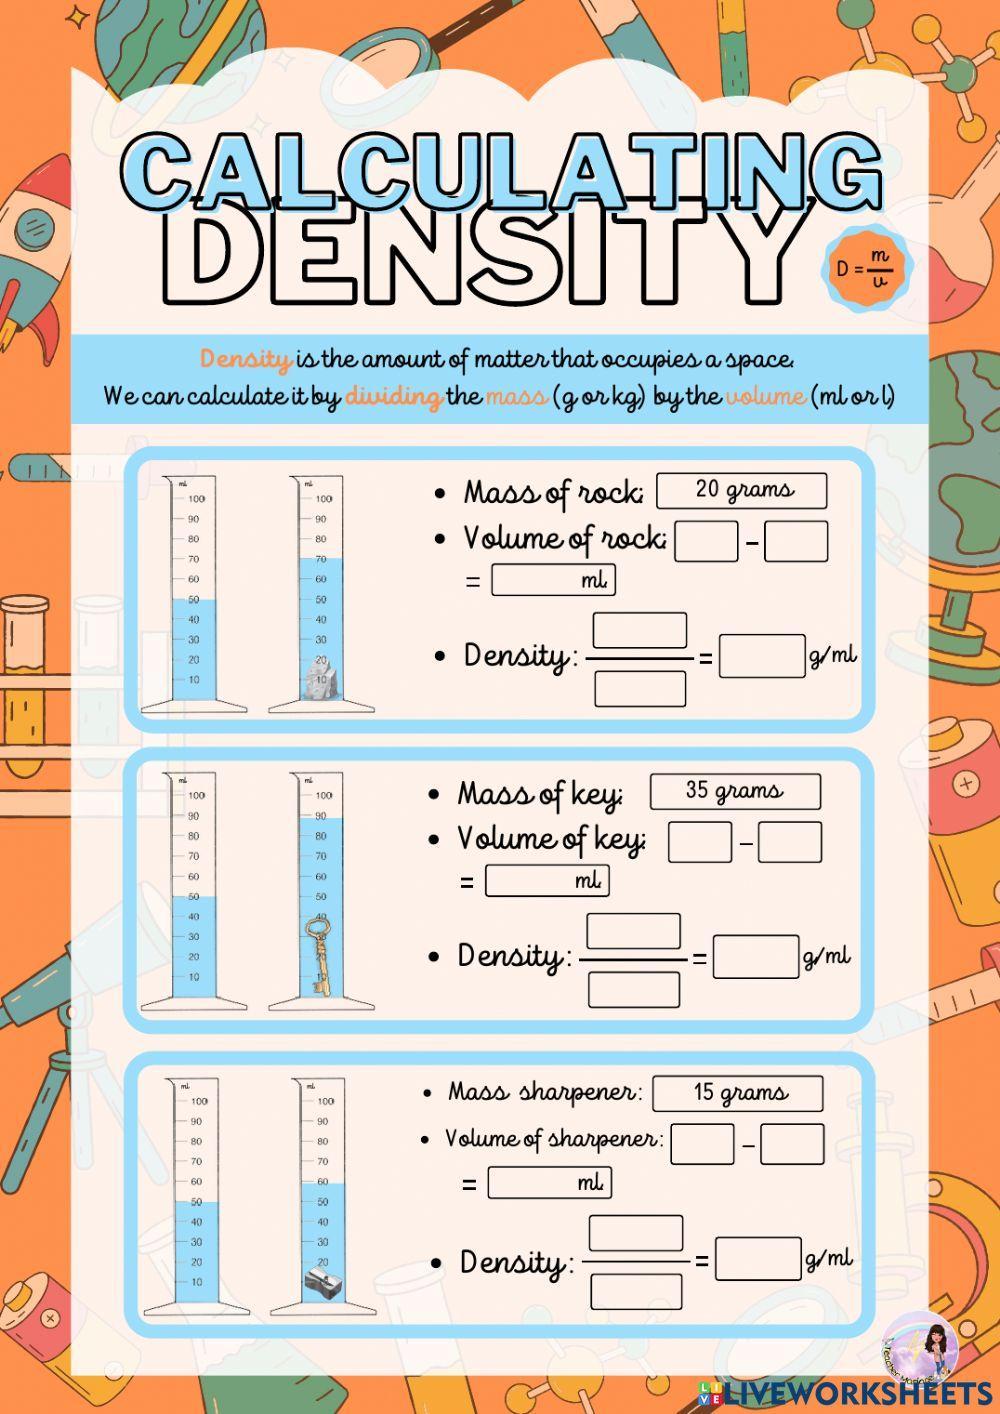 Calculating density